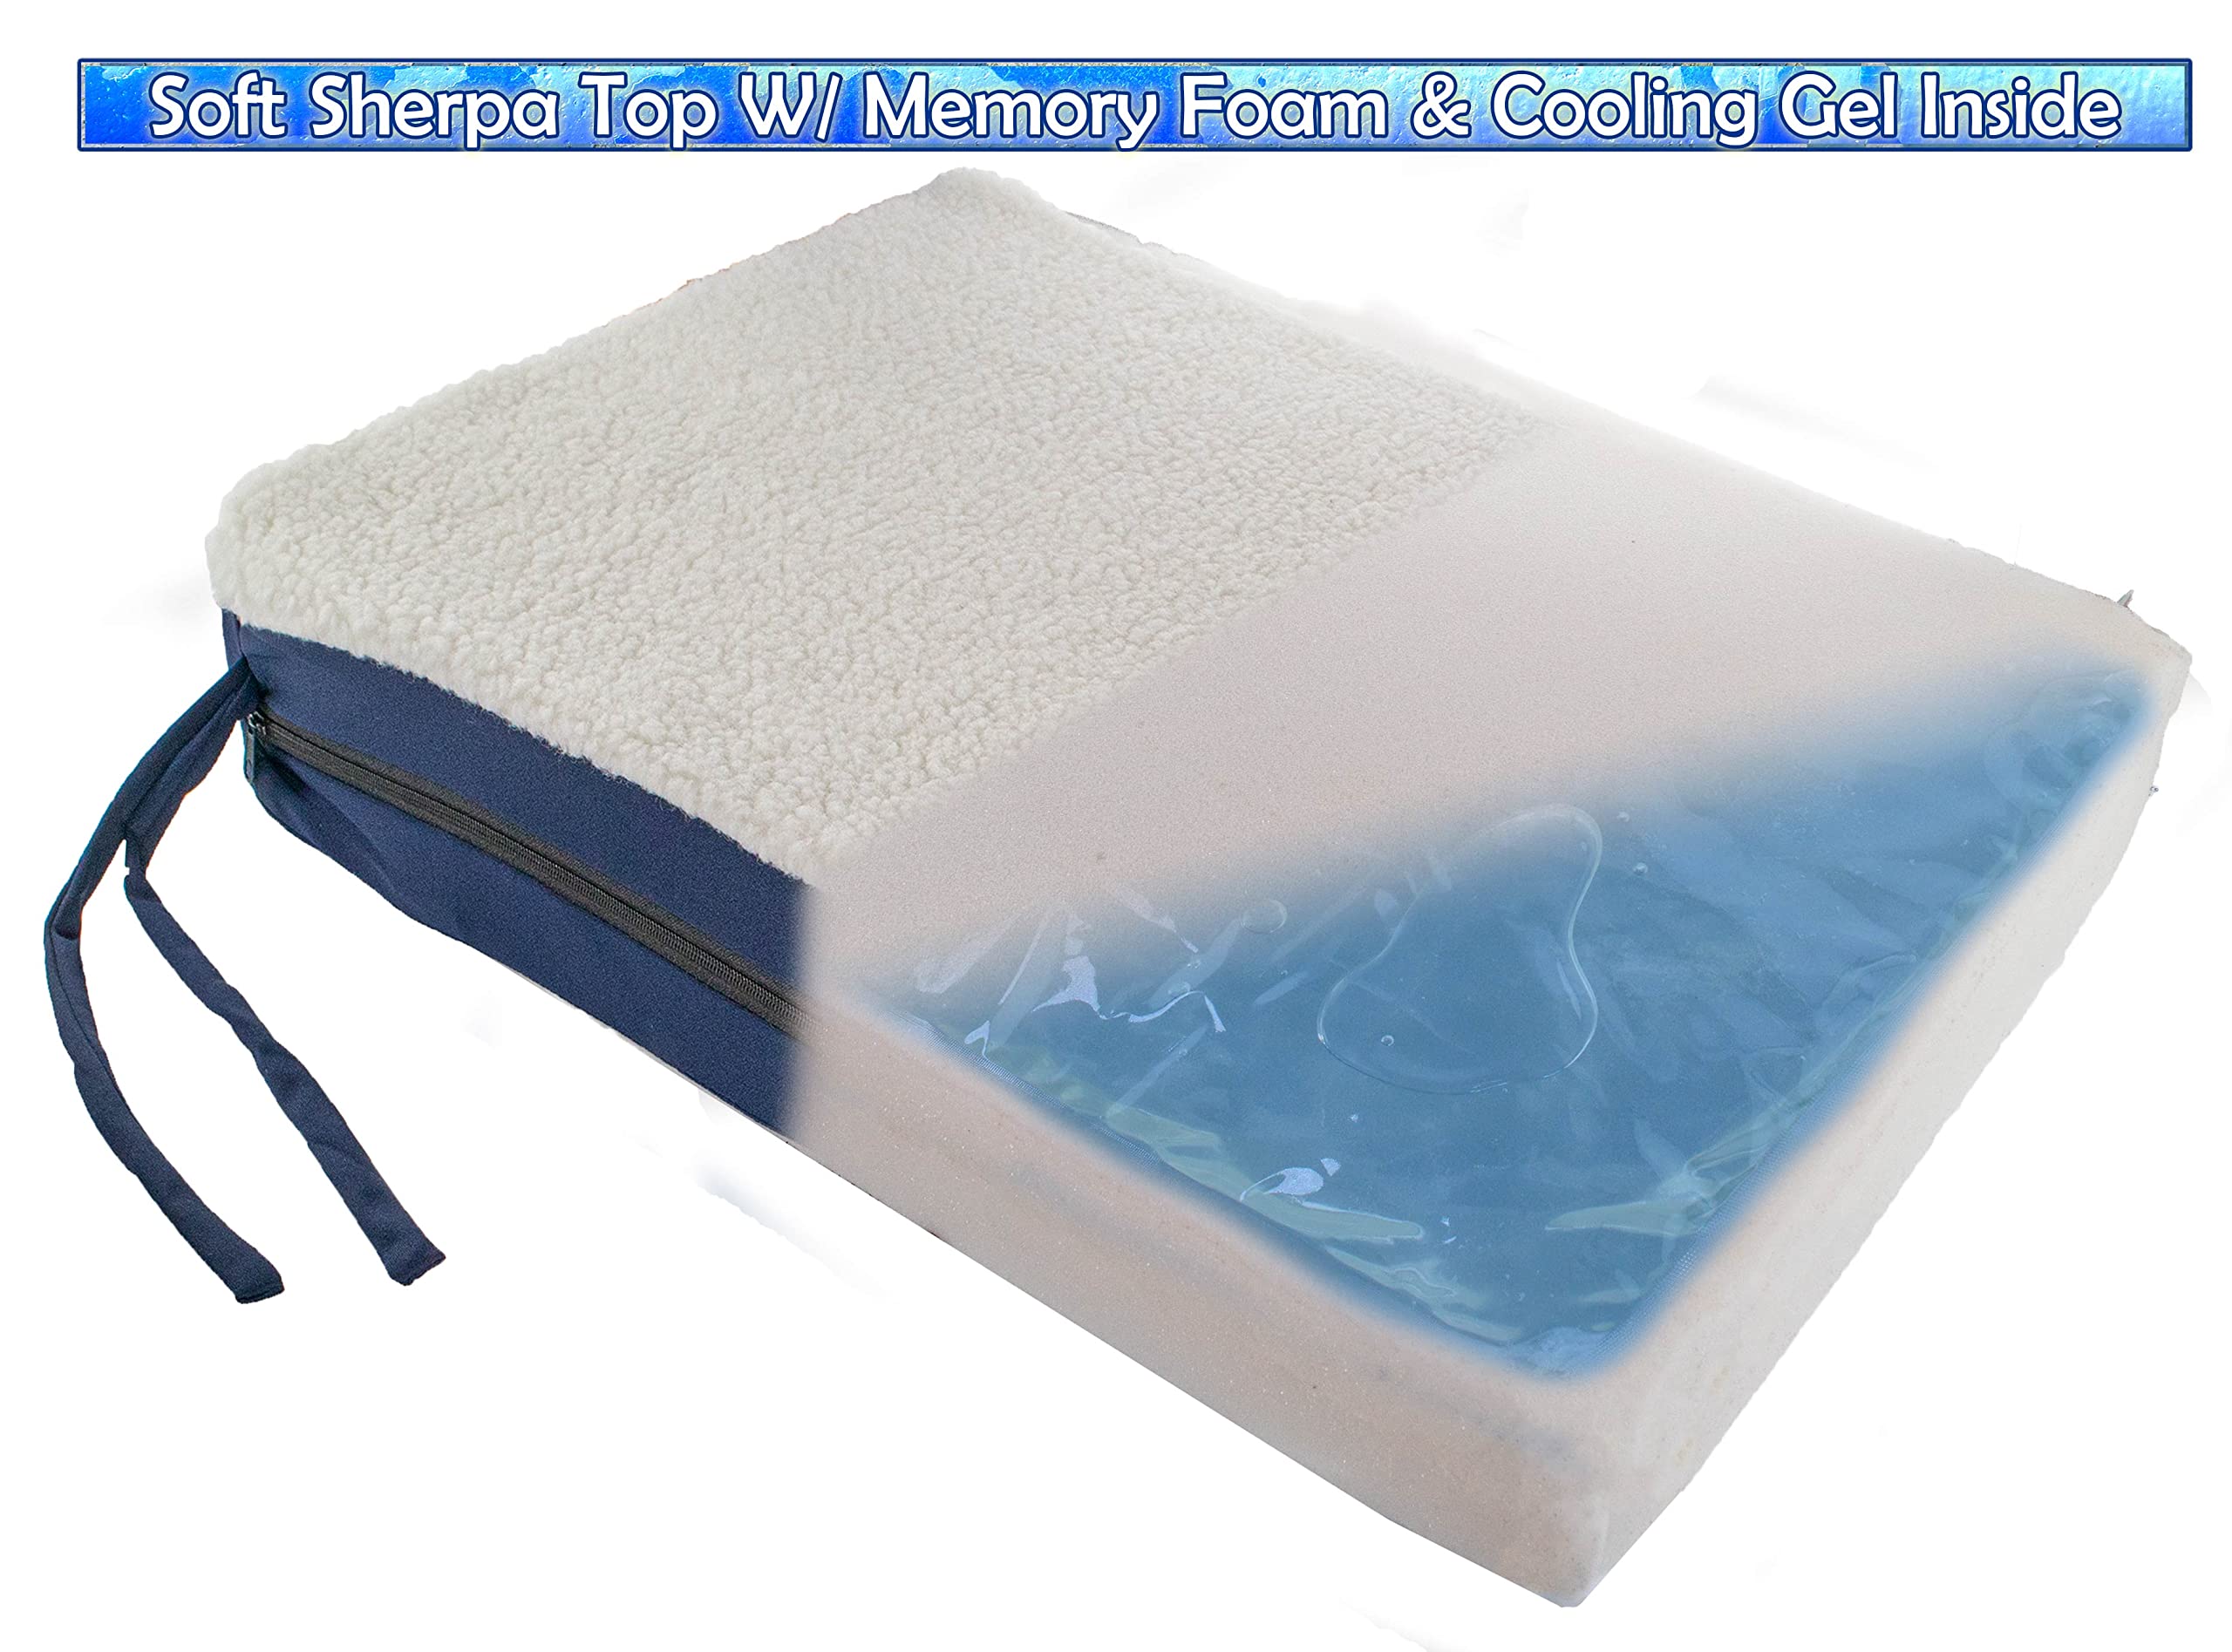 5 STAR SUPER DEALS Premium Comfy Orthopedic Gel Memory Foam Seat Cushion Pad for Office Chair, Car, Wheelchair & More - Seen On TV (1pc Set)